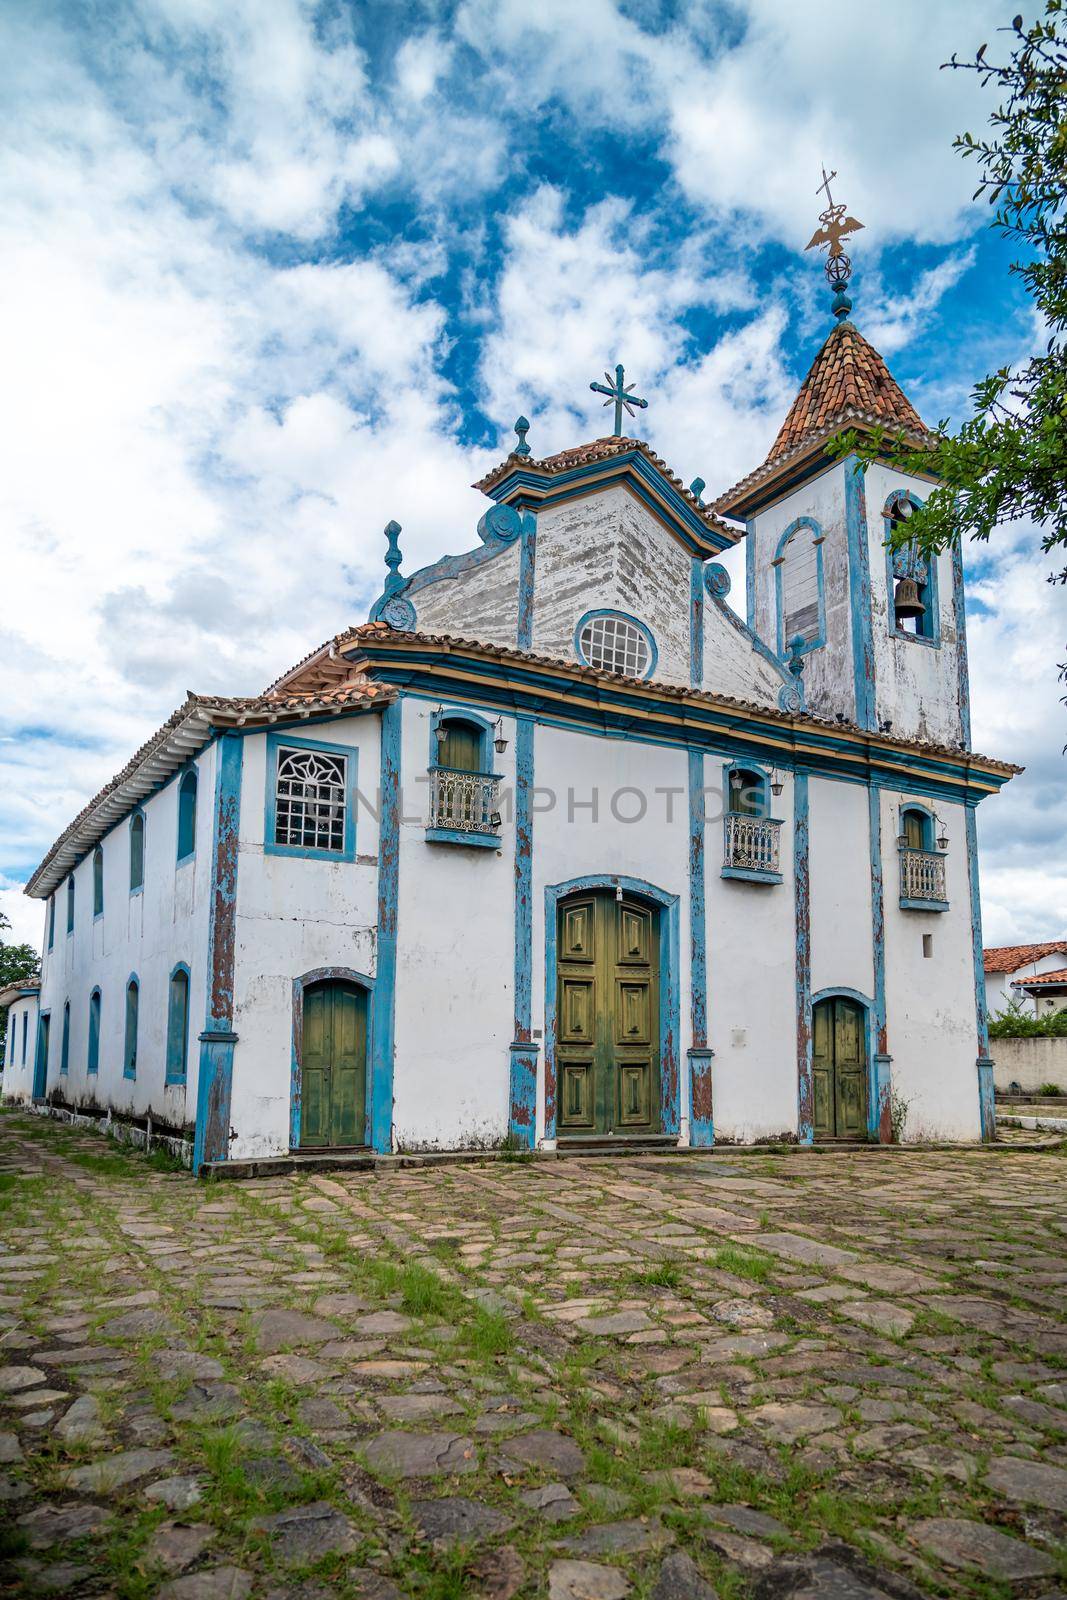 Nossa Senhora do Rosario Church, Diamantina, Brazil by Edophoto